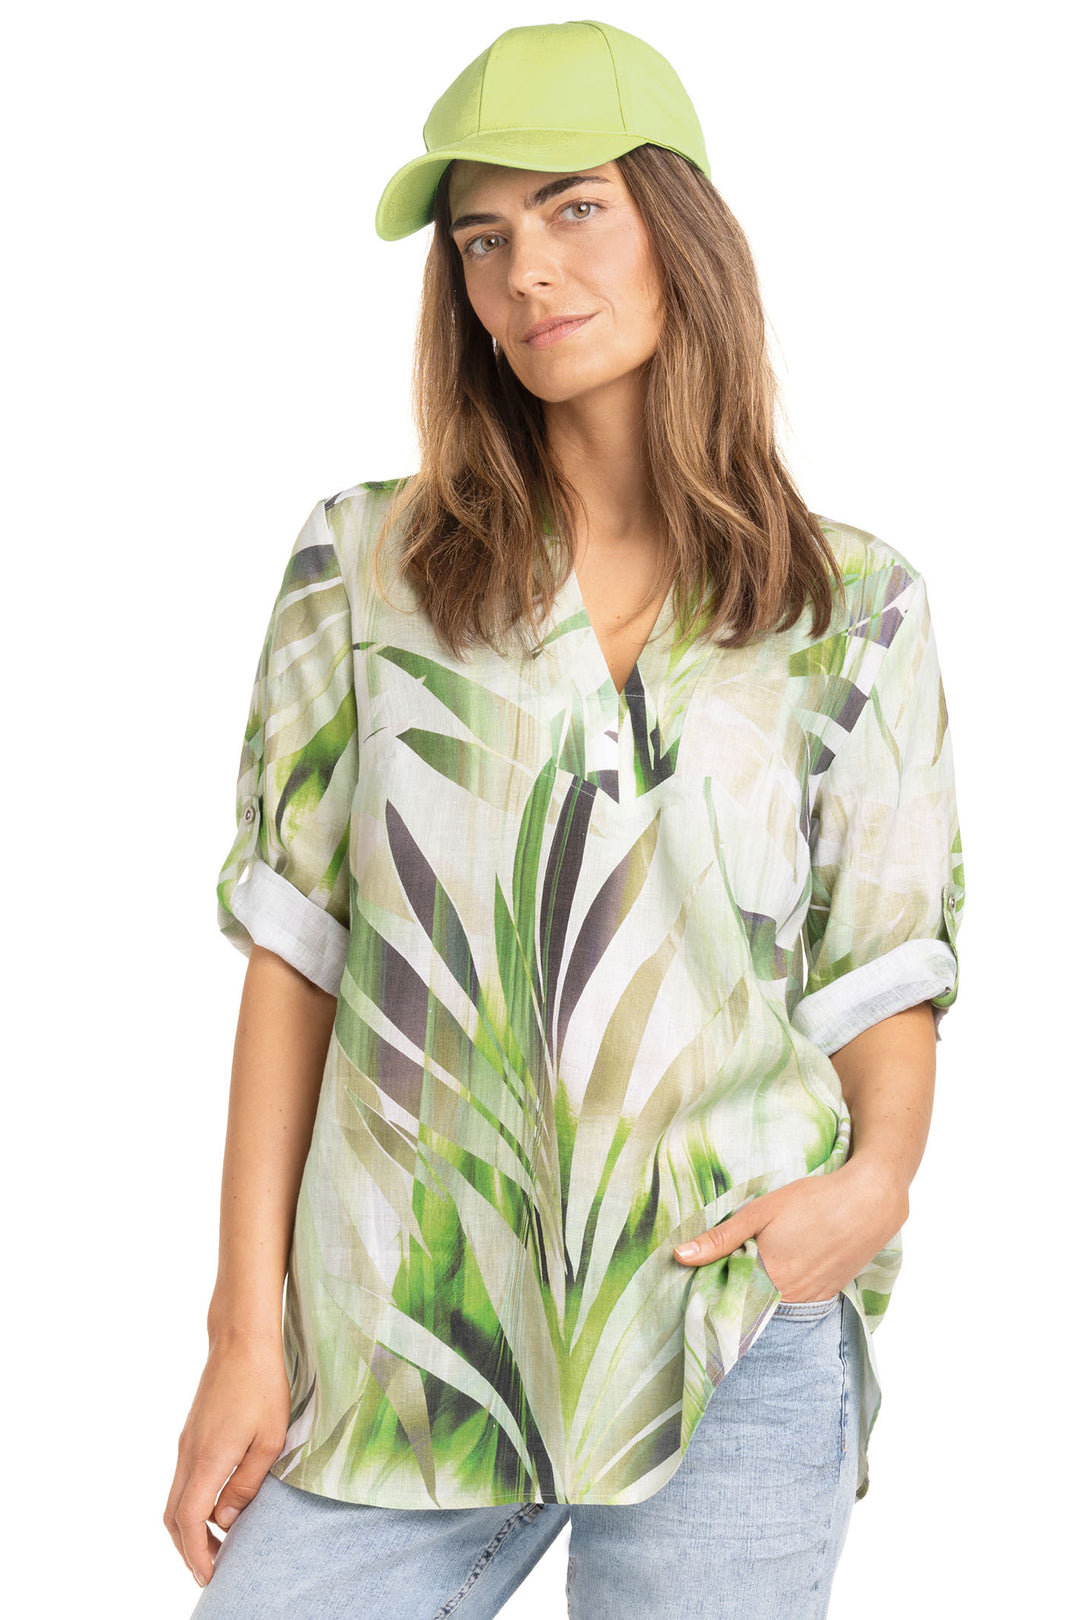 Doris Streich 294450 74 Green Palm Print Split Neck Top - Shirley Allum Boutique